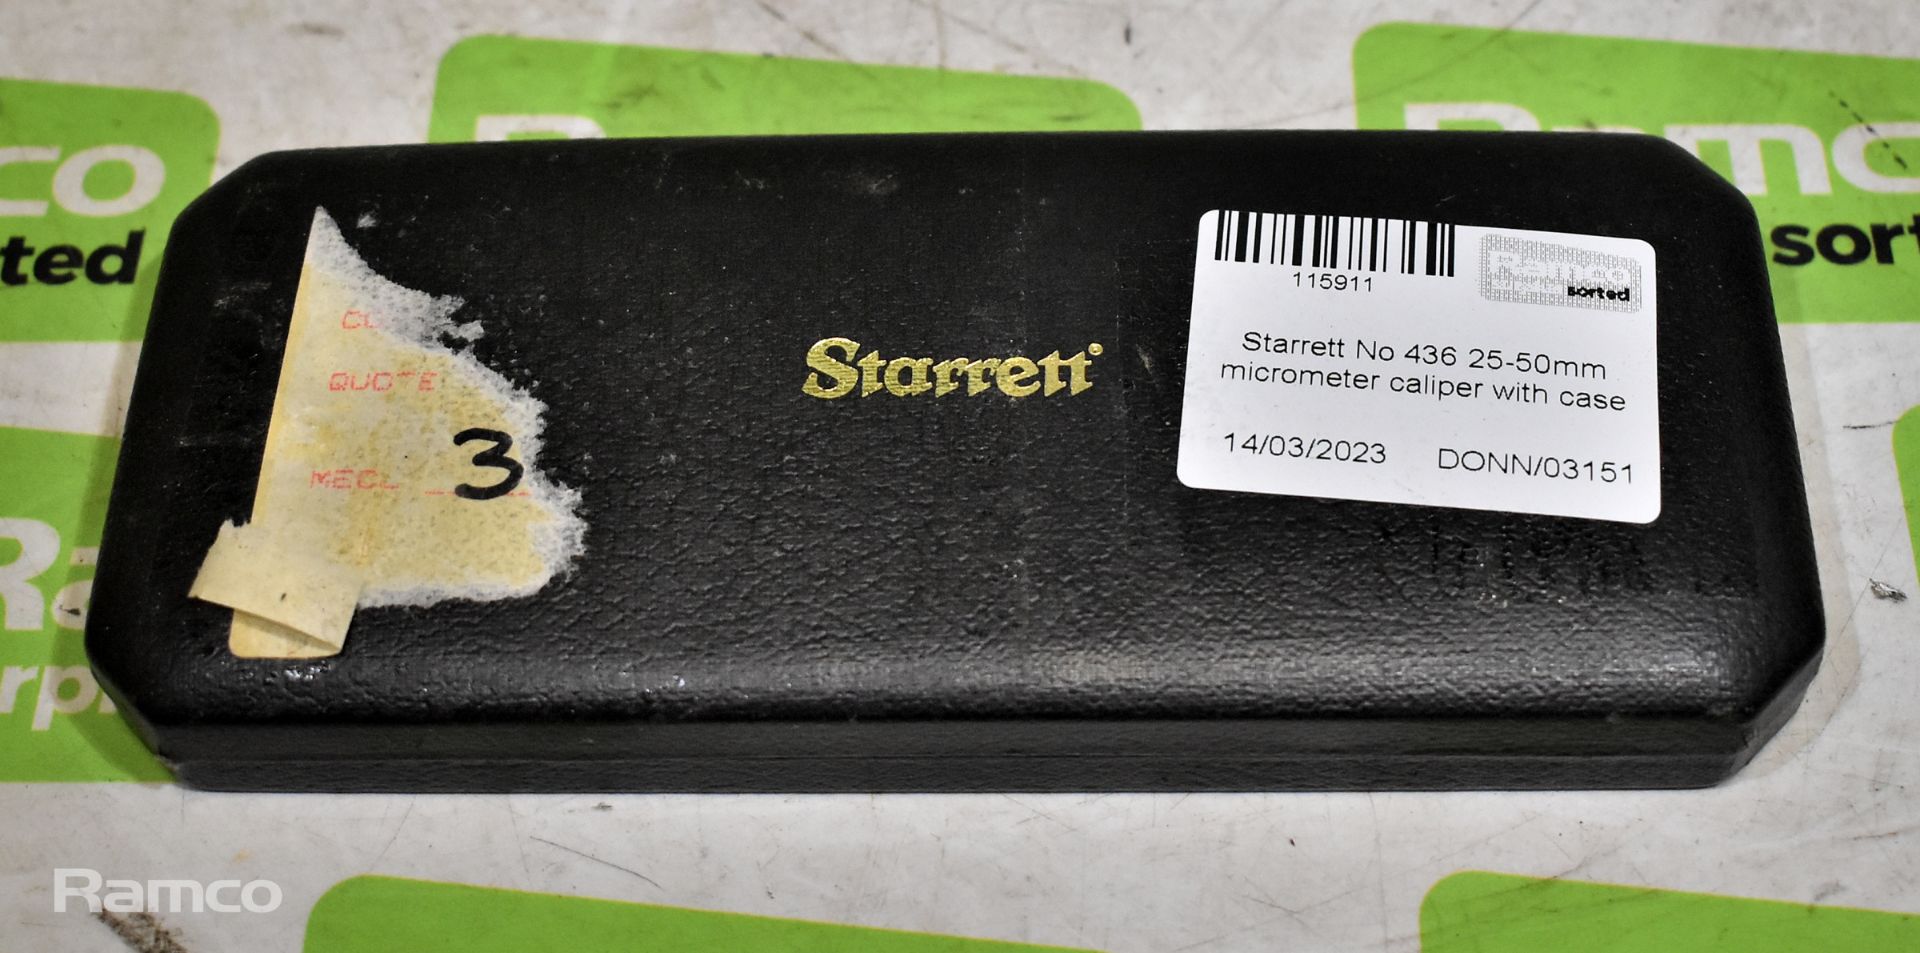 Starrett No 436 25-50mm micrometer caliper with case - Image 4 of 4